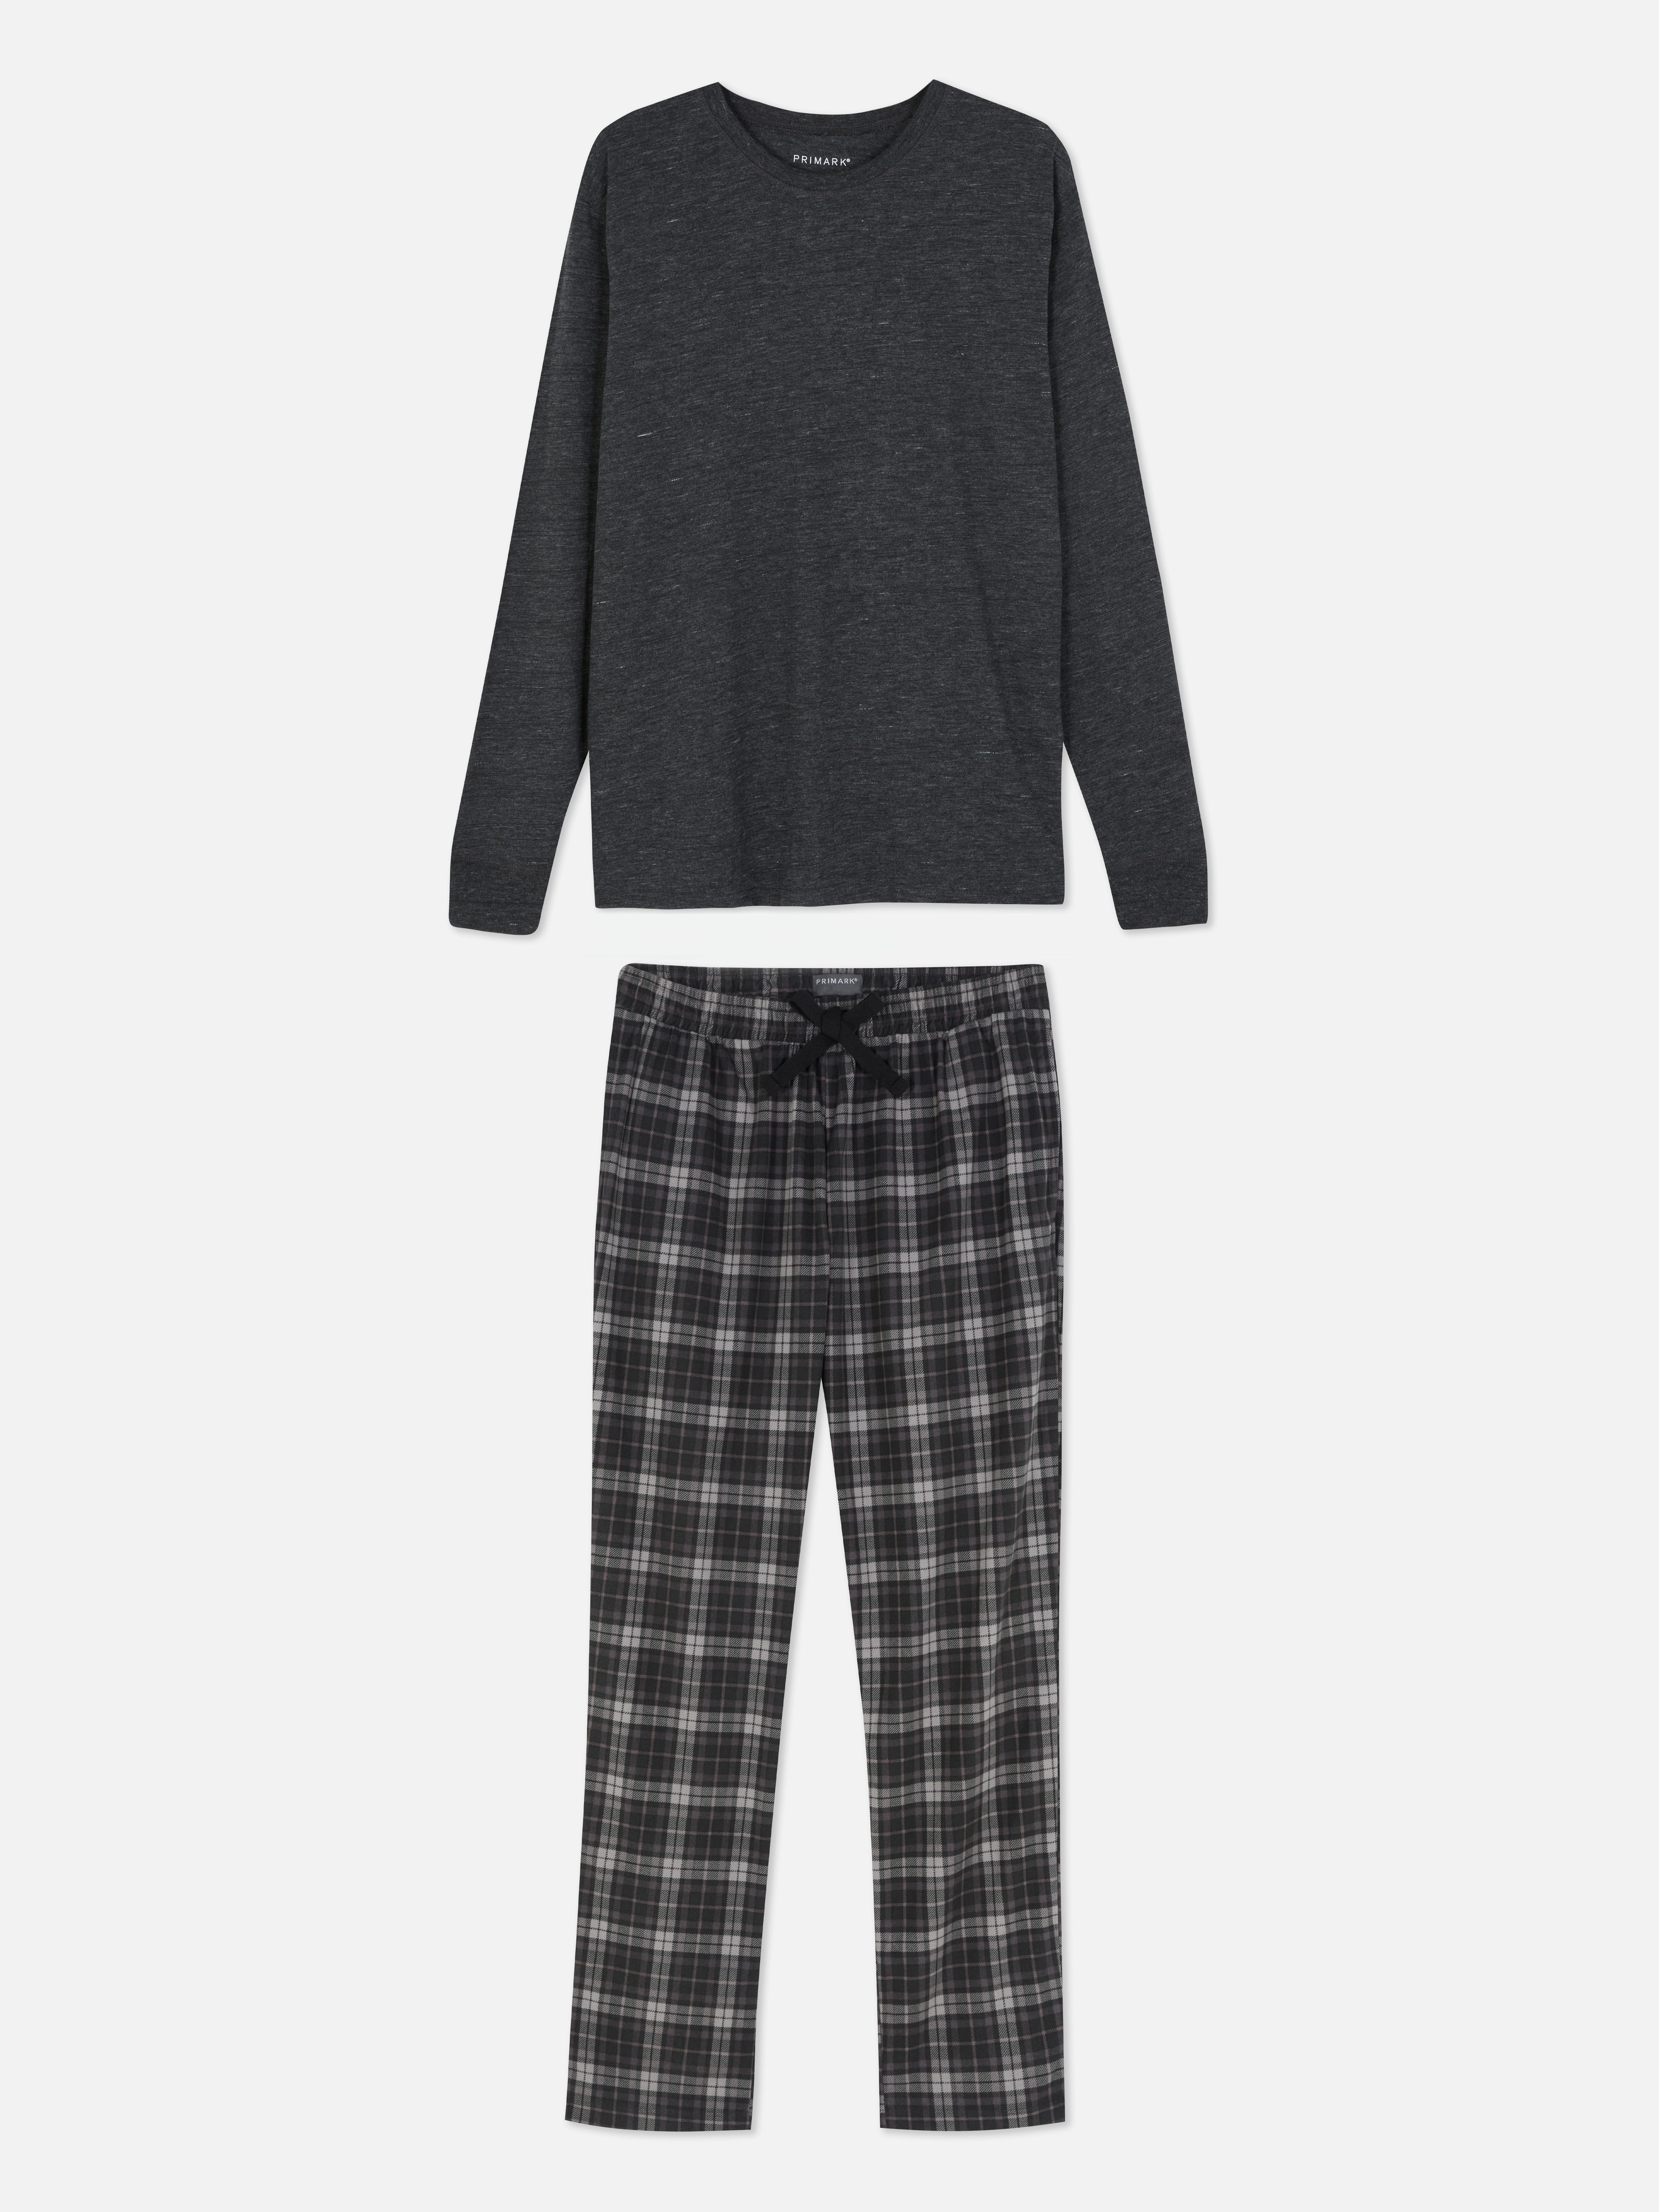 Checked Pyjama Set